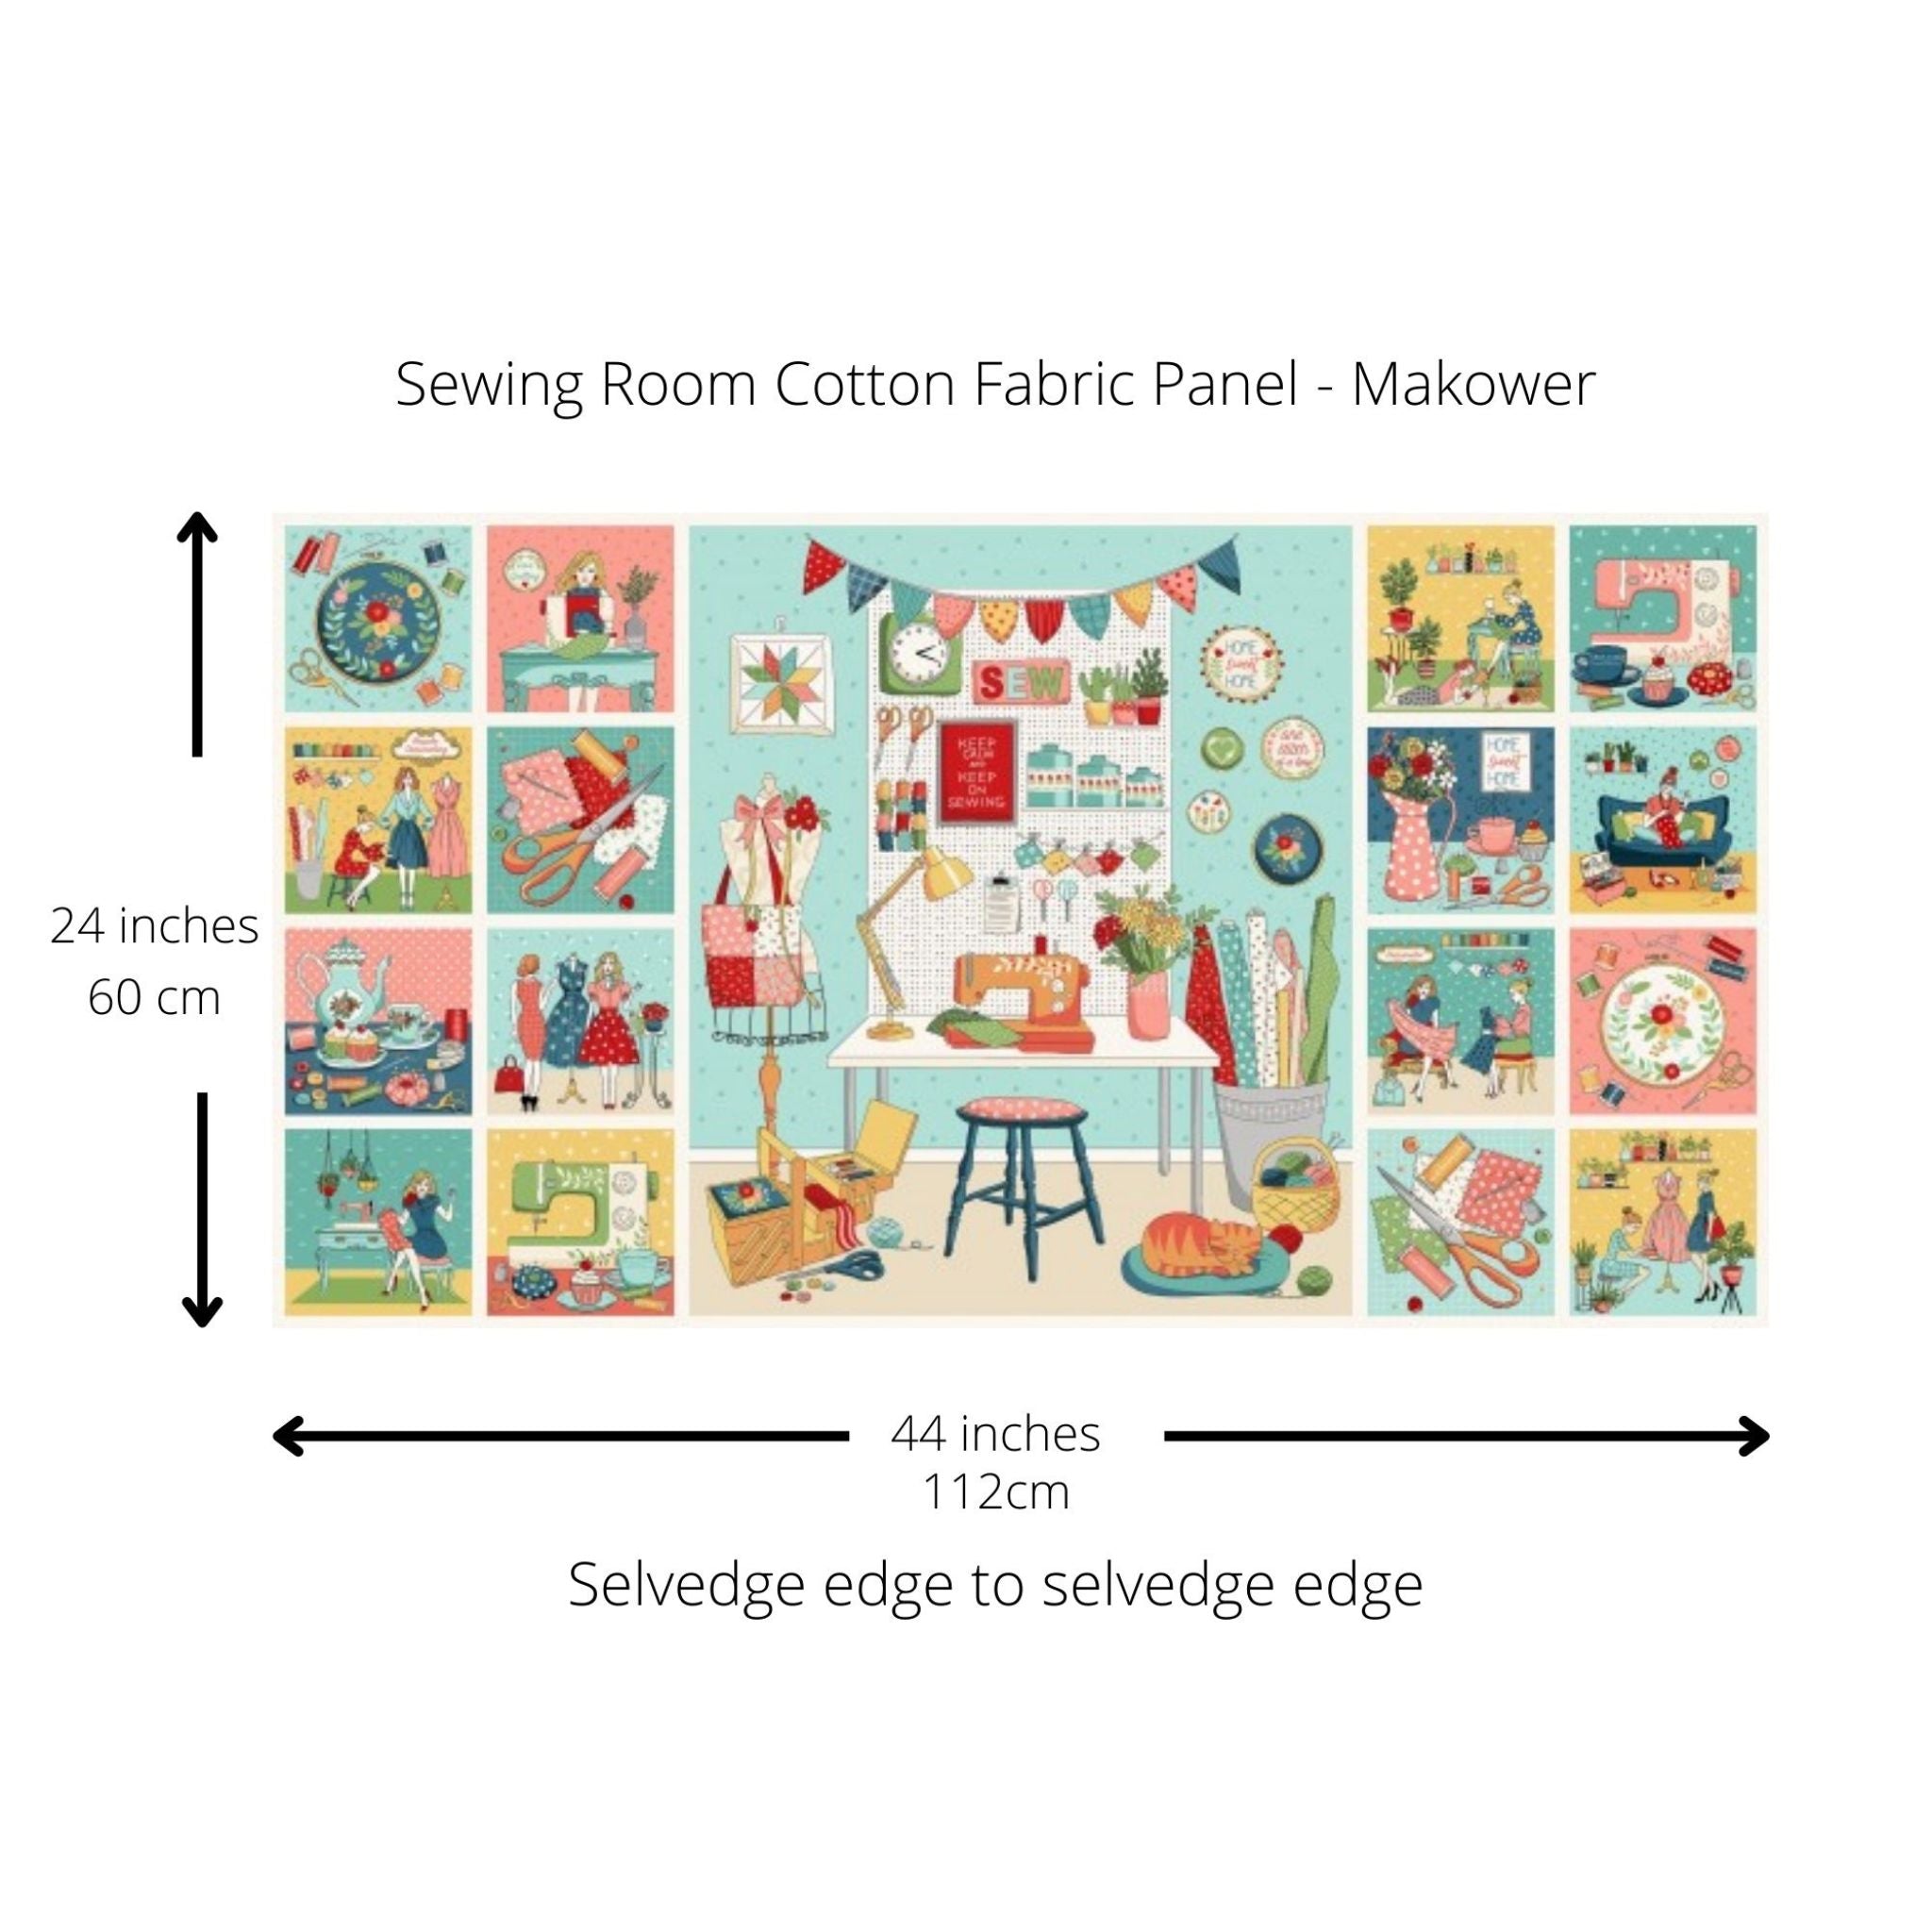 Sewing Room cotton fabric panel - Makower